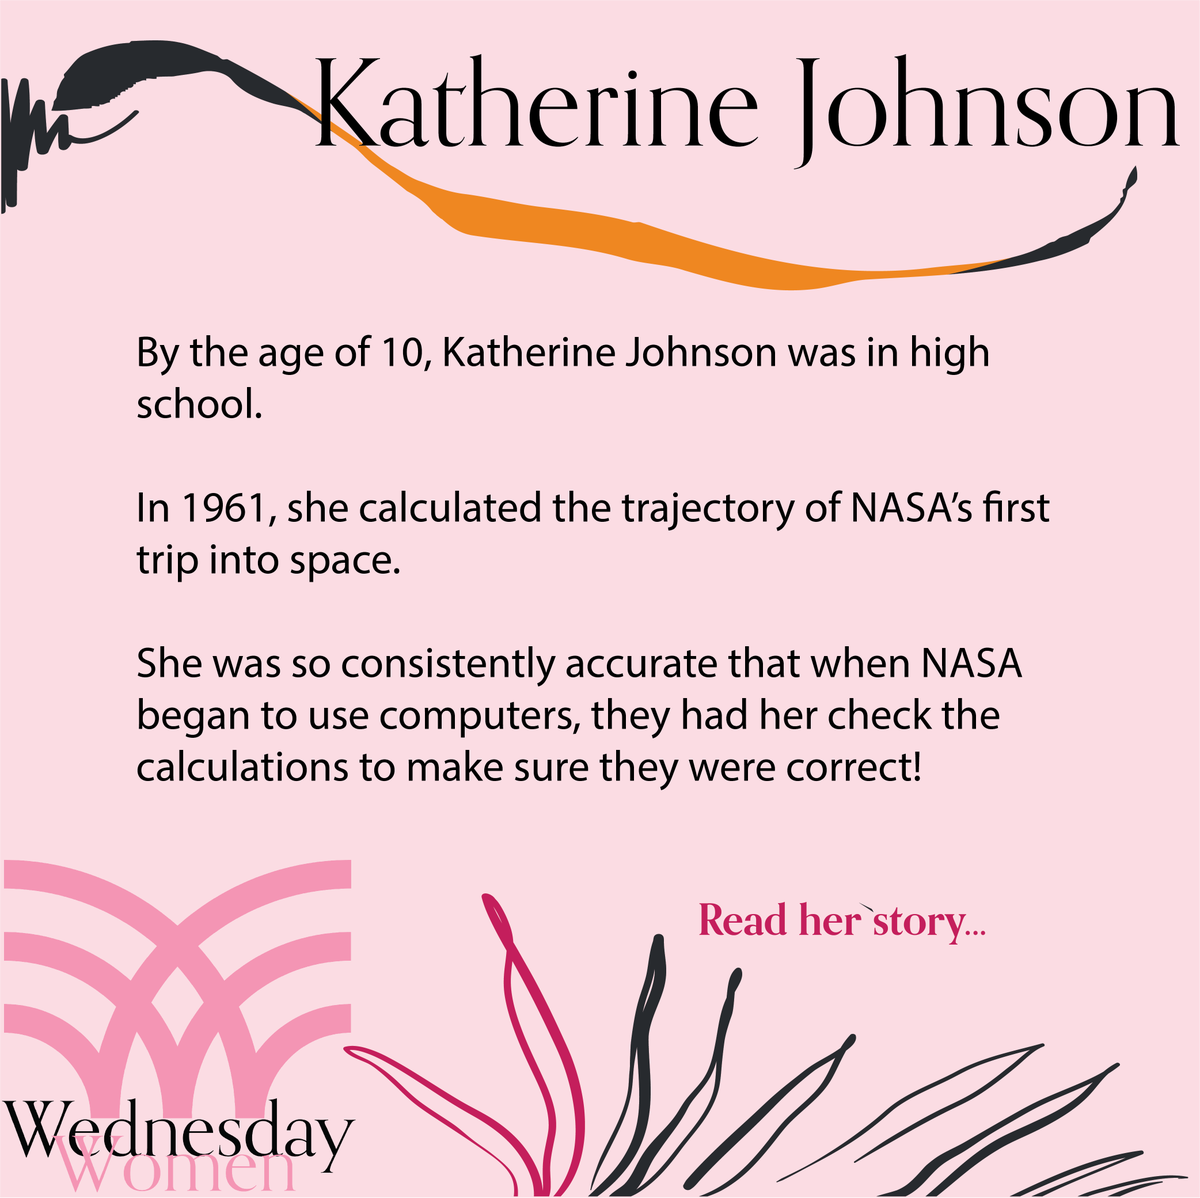 Katherine Johnson was smarter than a computer!

nasa.gov/content/kather… 

#powerfulwoman #ibelieveher #metoomovement #feministartist
#womensequality #yourvoicematters #goddesswithin
#smashthepatriarchy #warriorwoman #maywebethem #girlsruntheworld